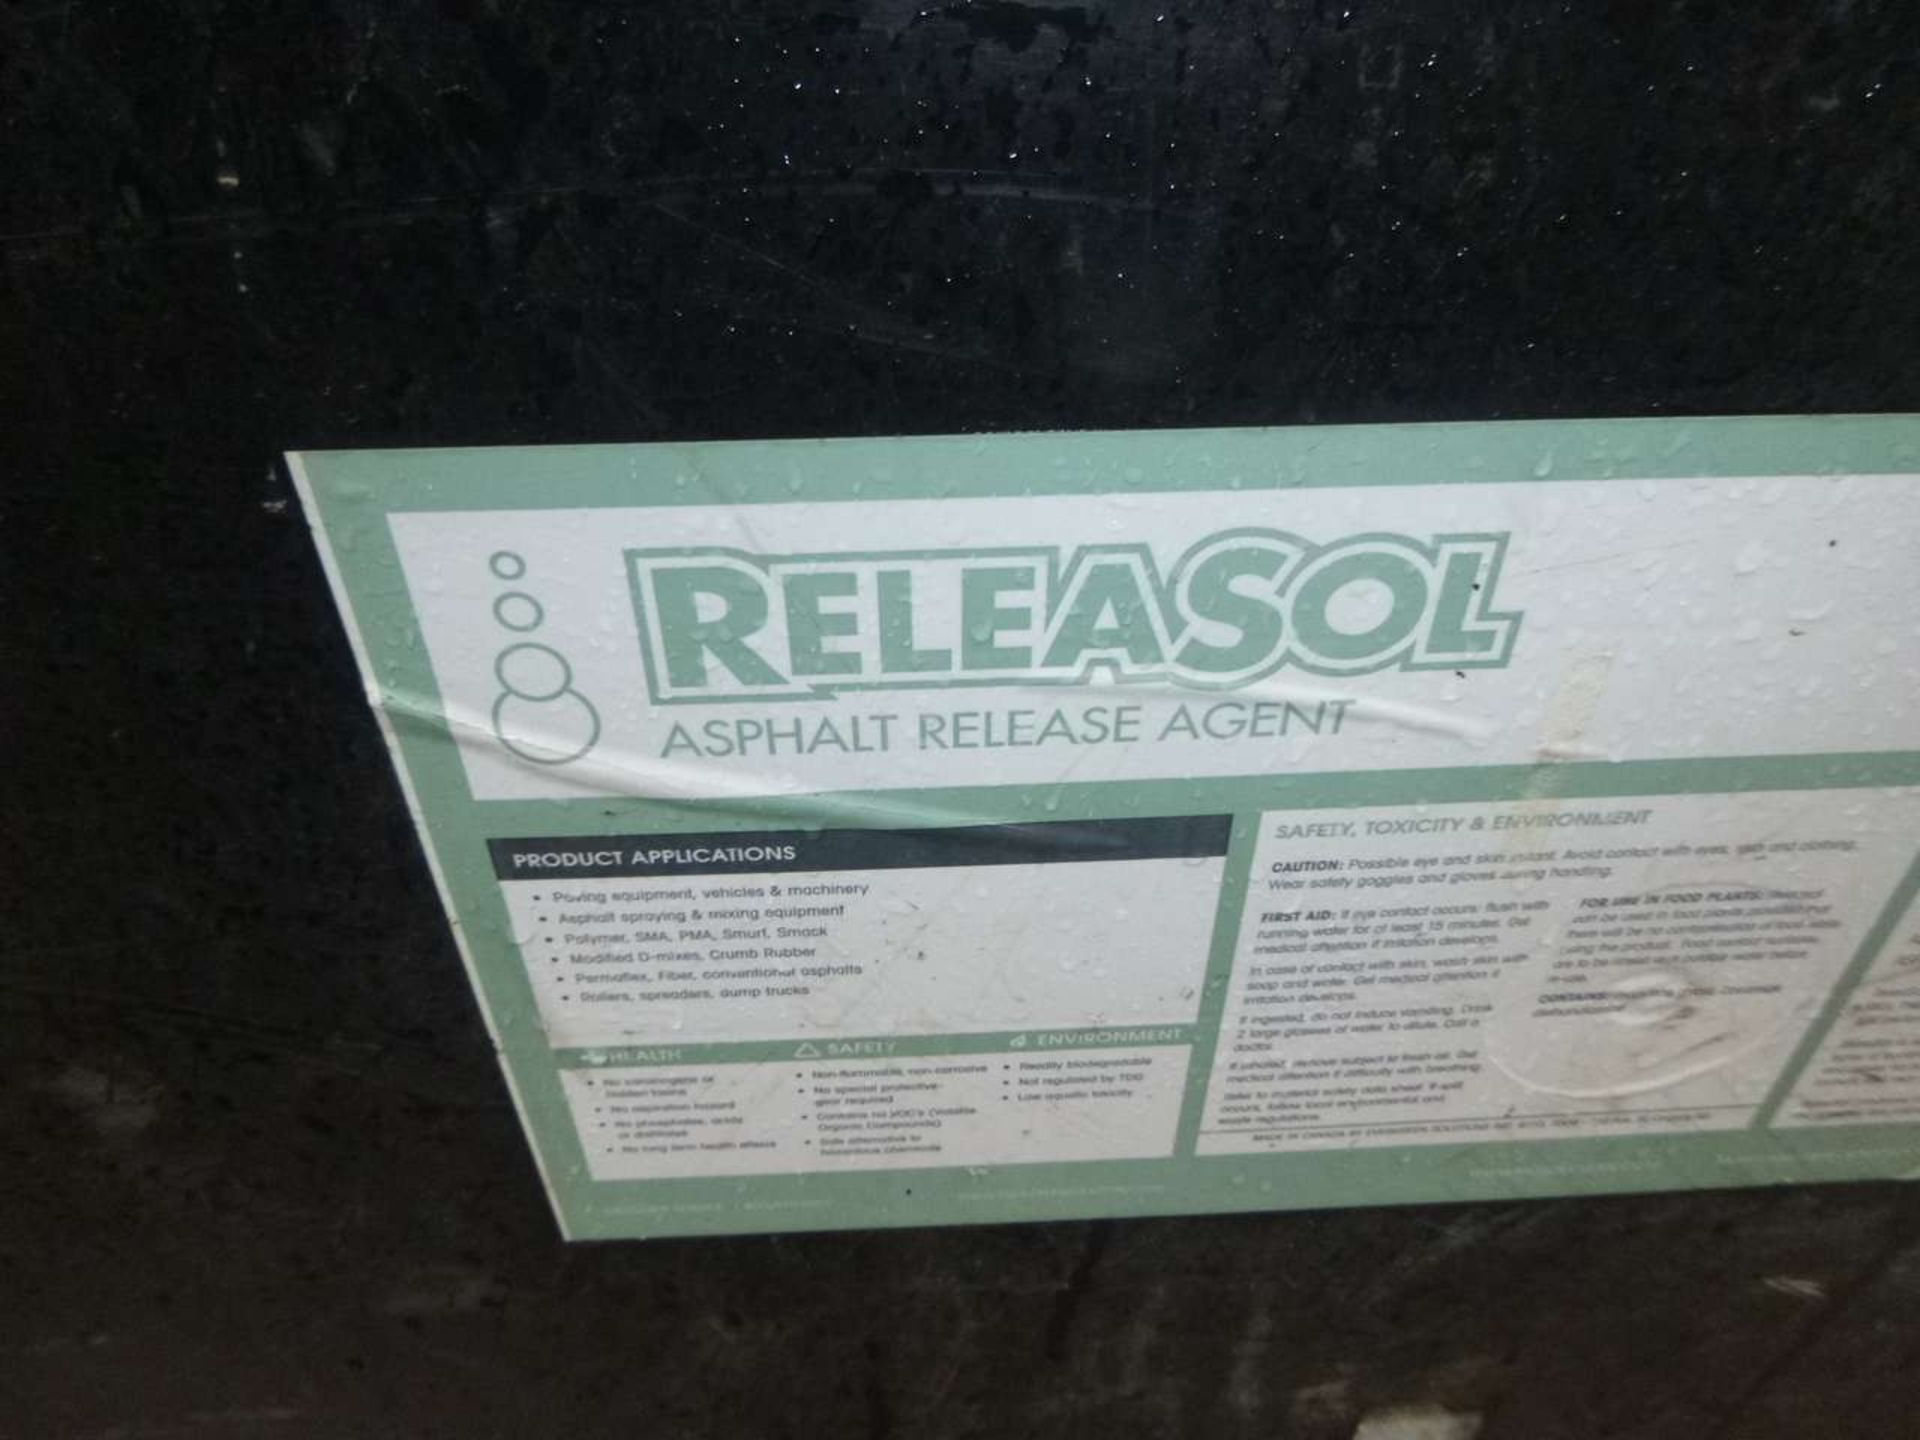 1/2 tote of Releasol asphalt release agent - Image 2 of 2